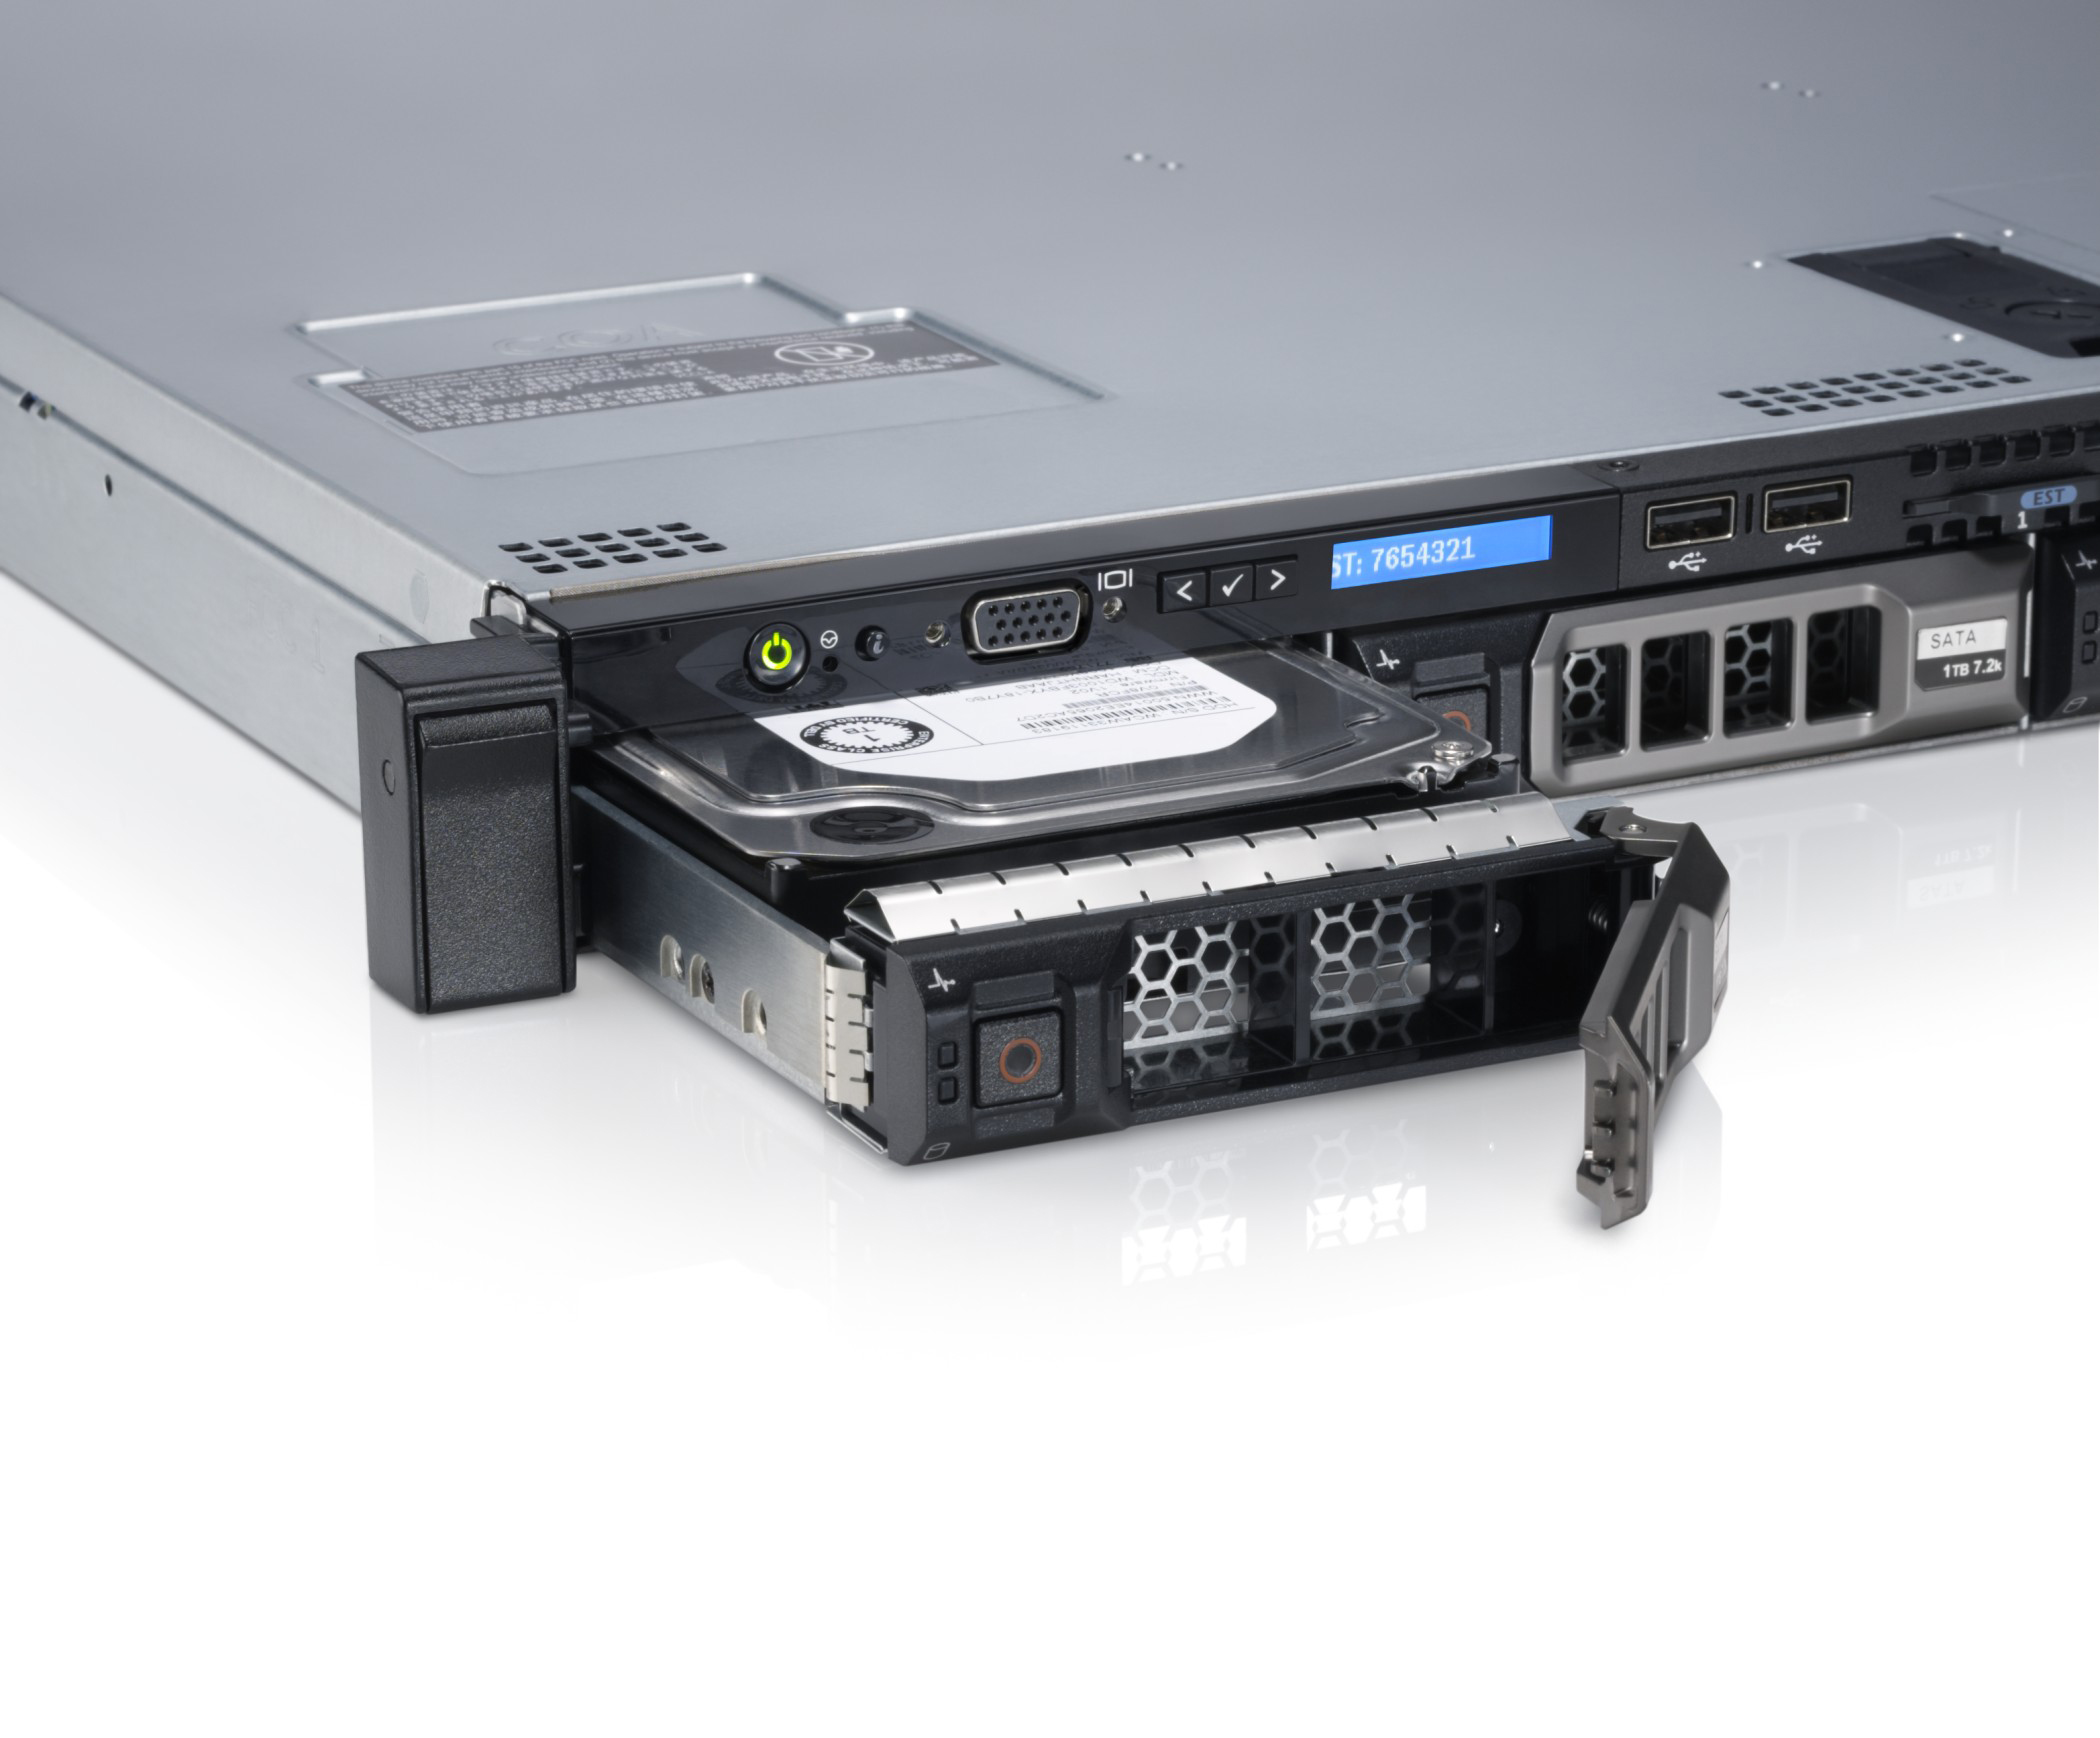 PowerEdge-R320-OEM-Rack-Server-Detail-Image_001